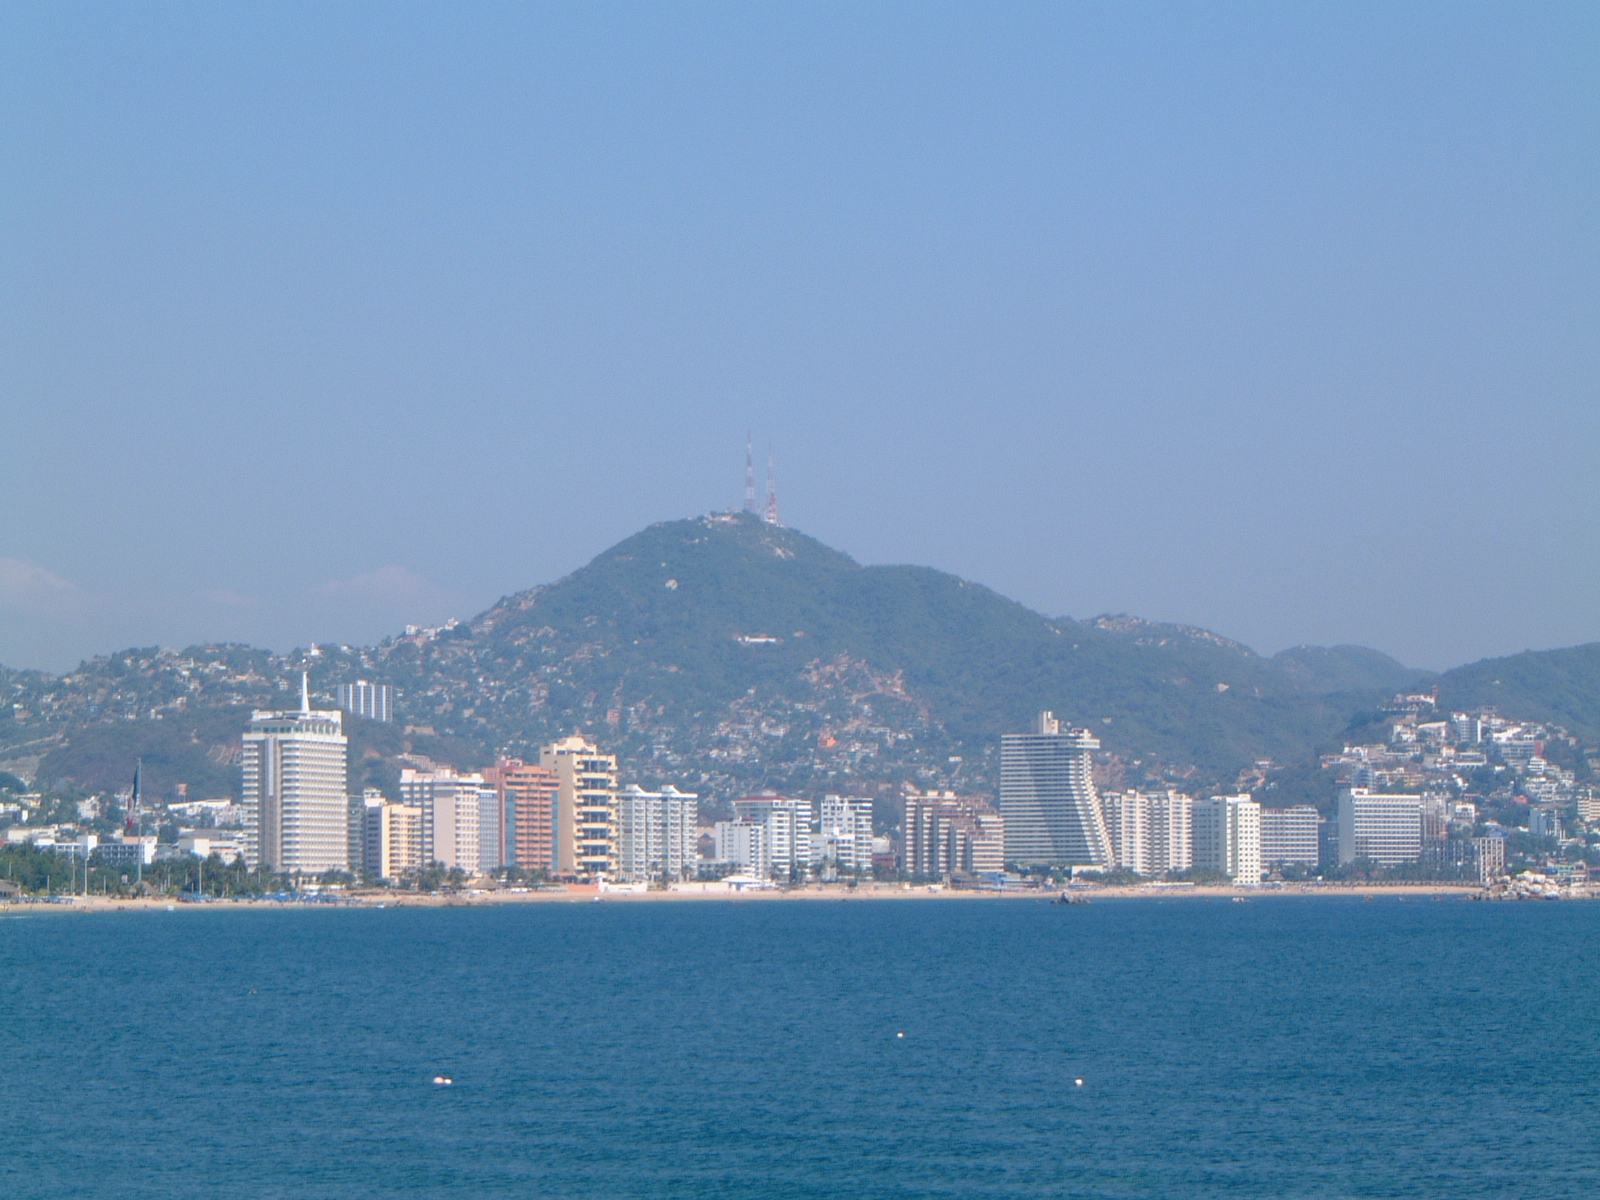 Acapulco, Guerrero, Mexico